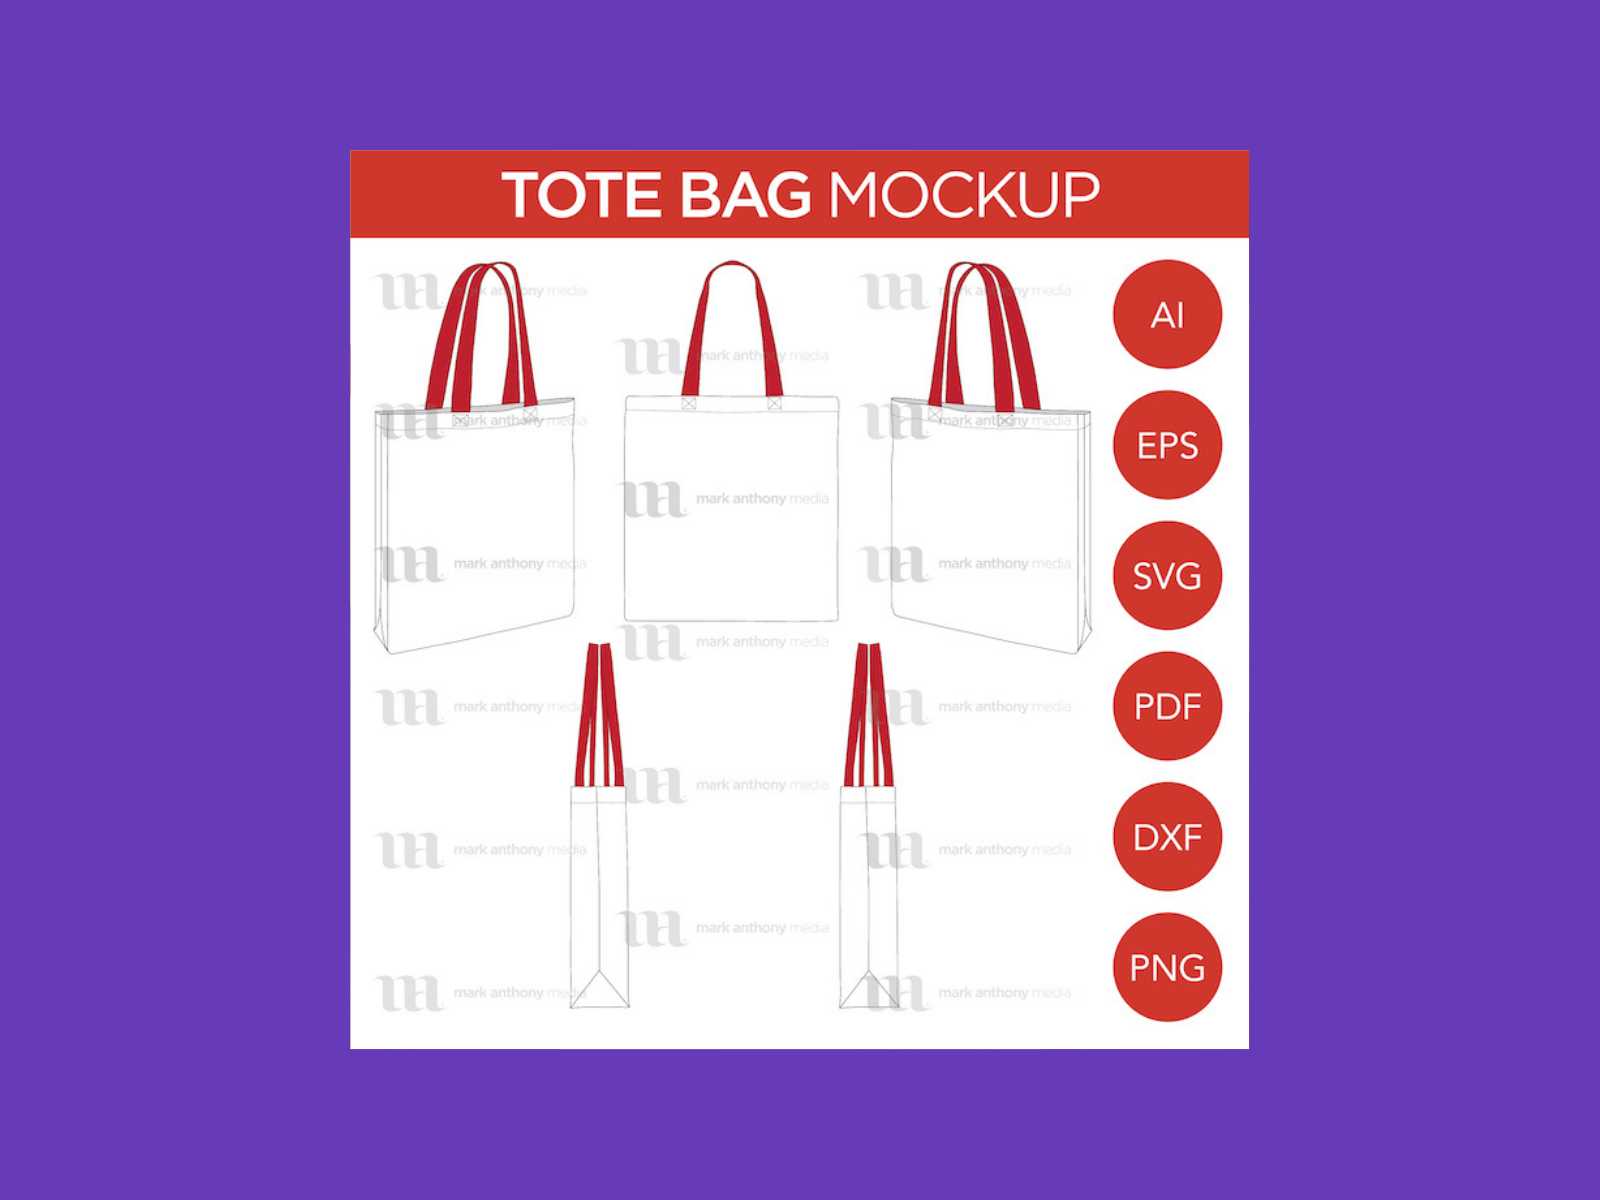 Tote Bag Mockup Vector Template by MasterBundles on Dribbble